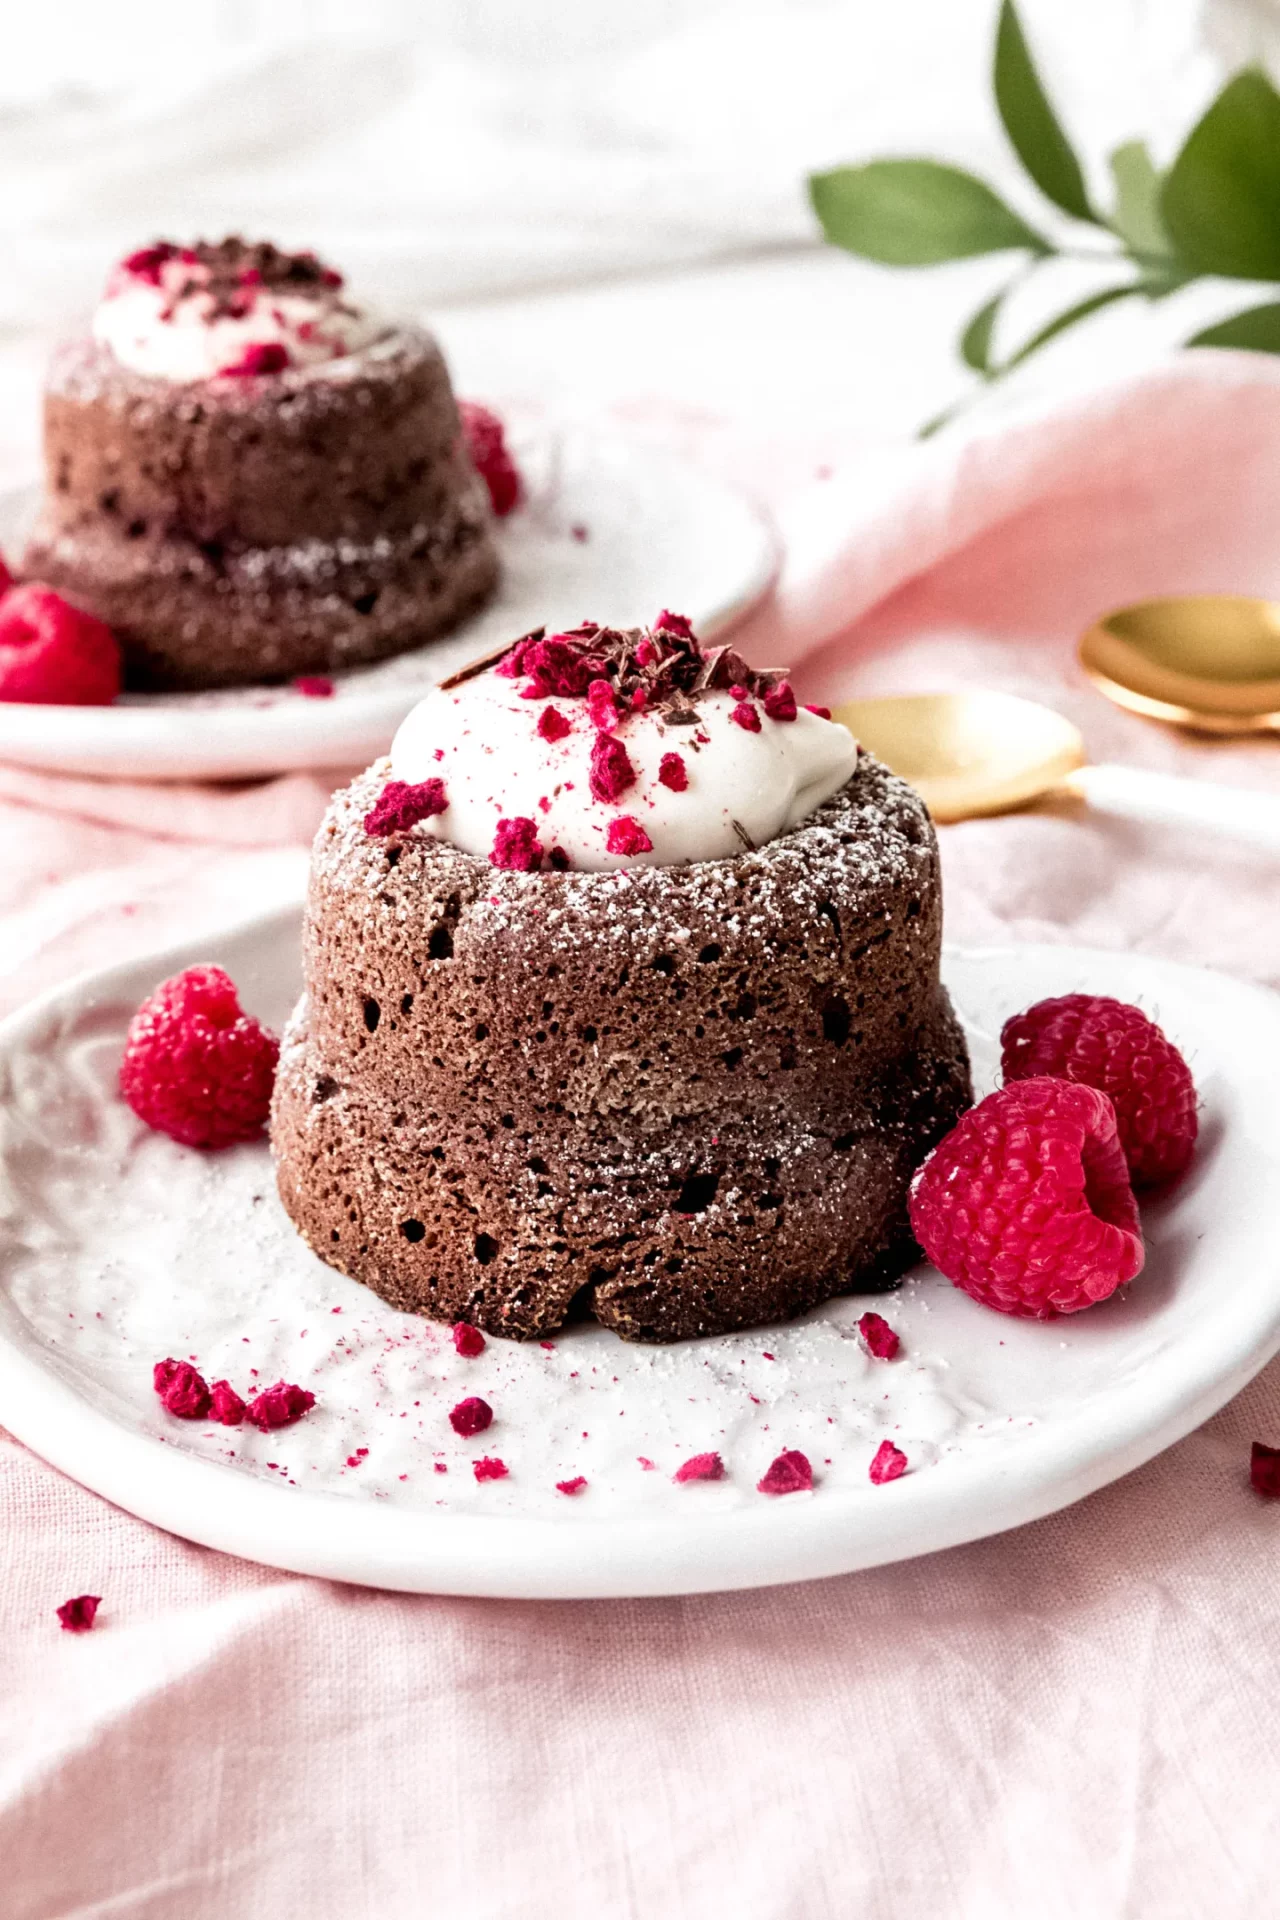 Chocolate molten lava cake with raspberries